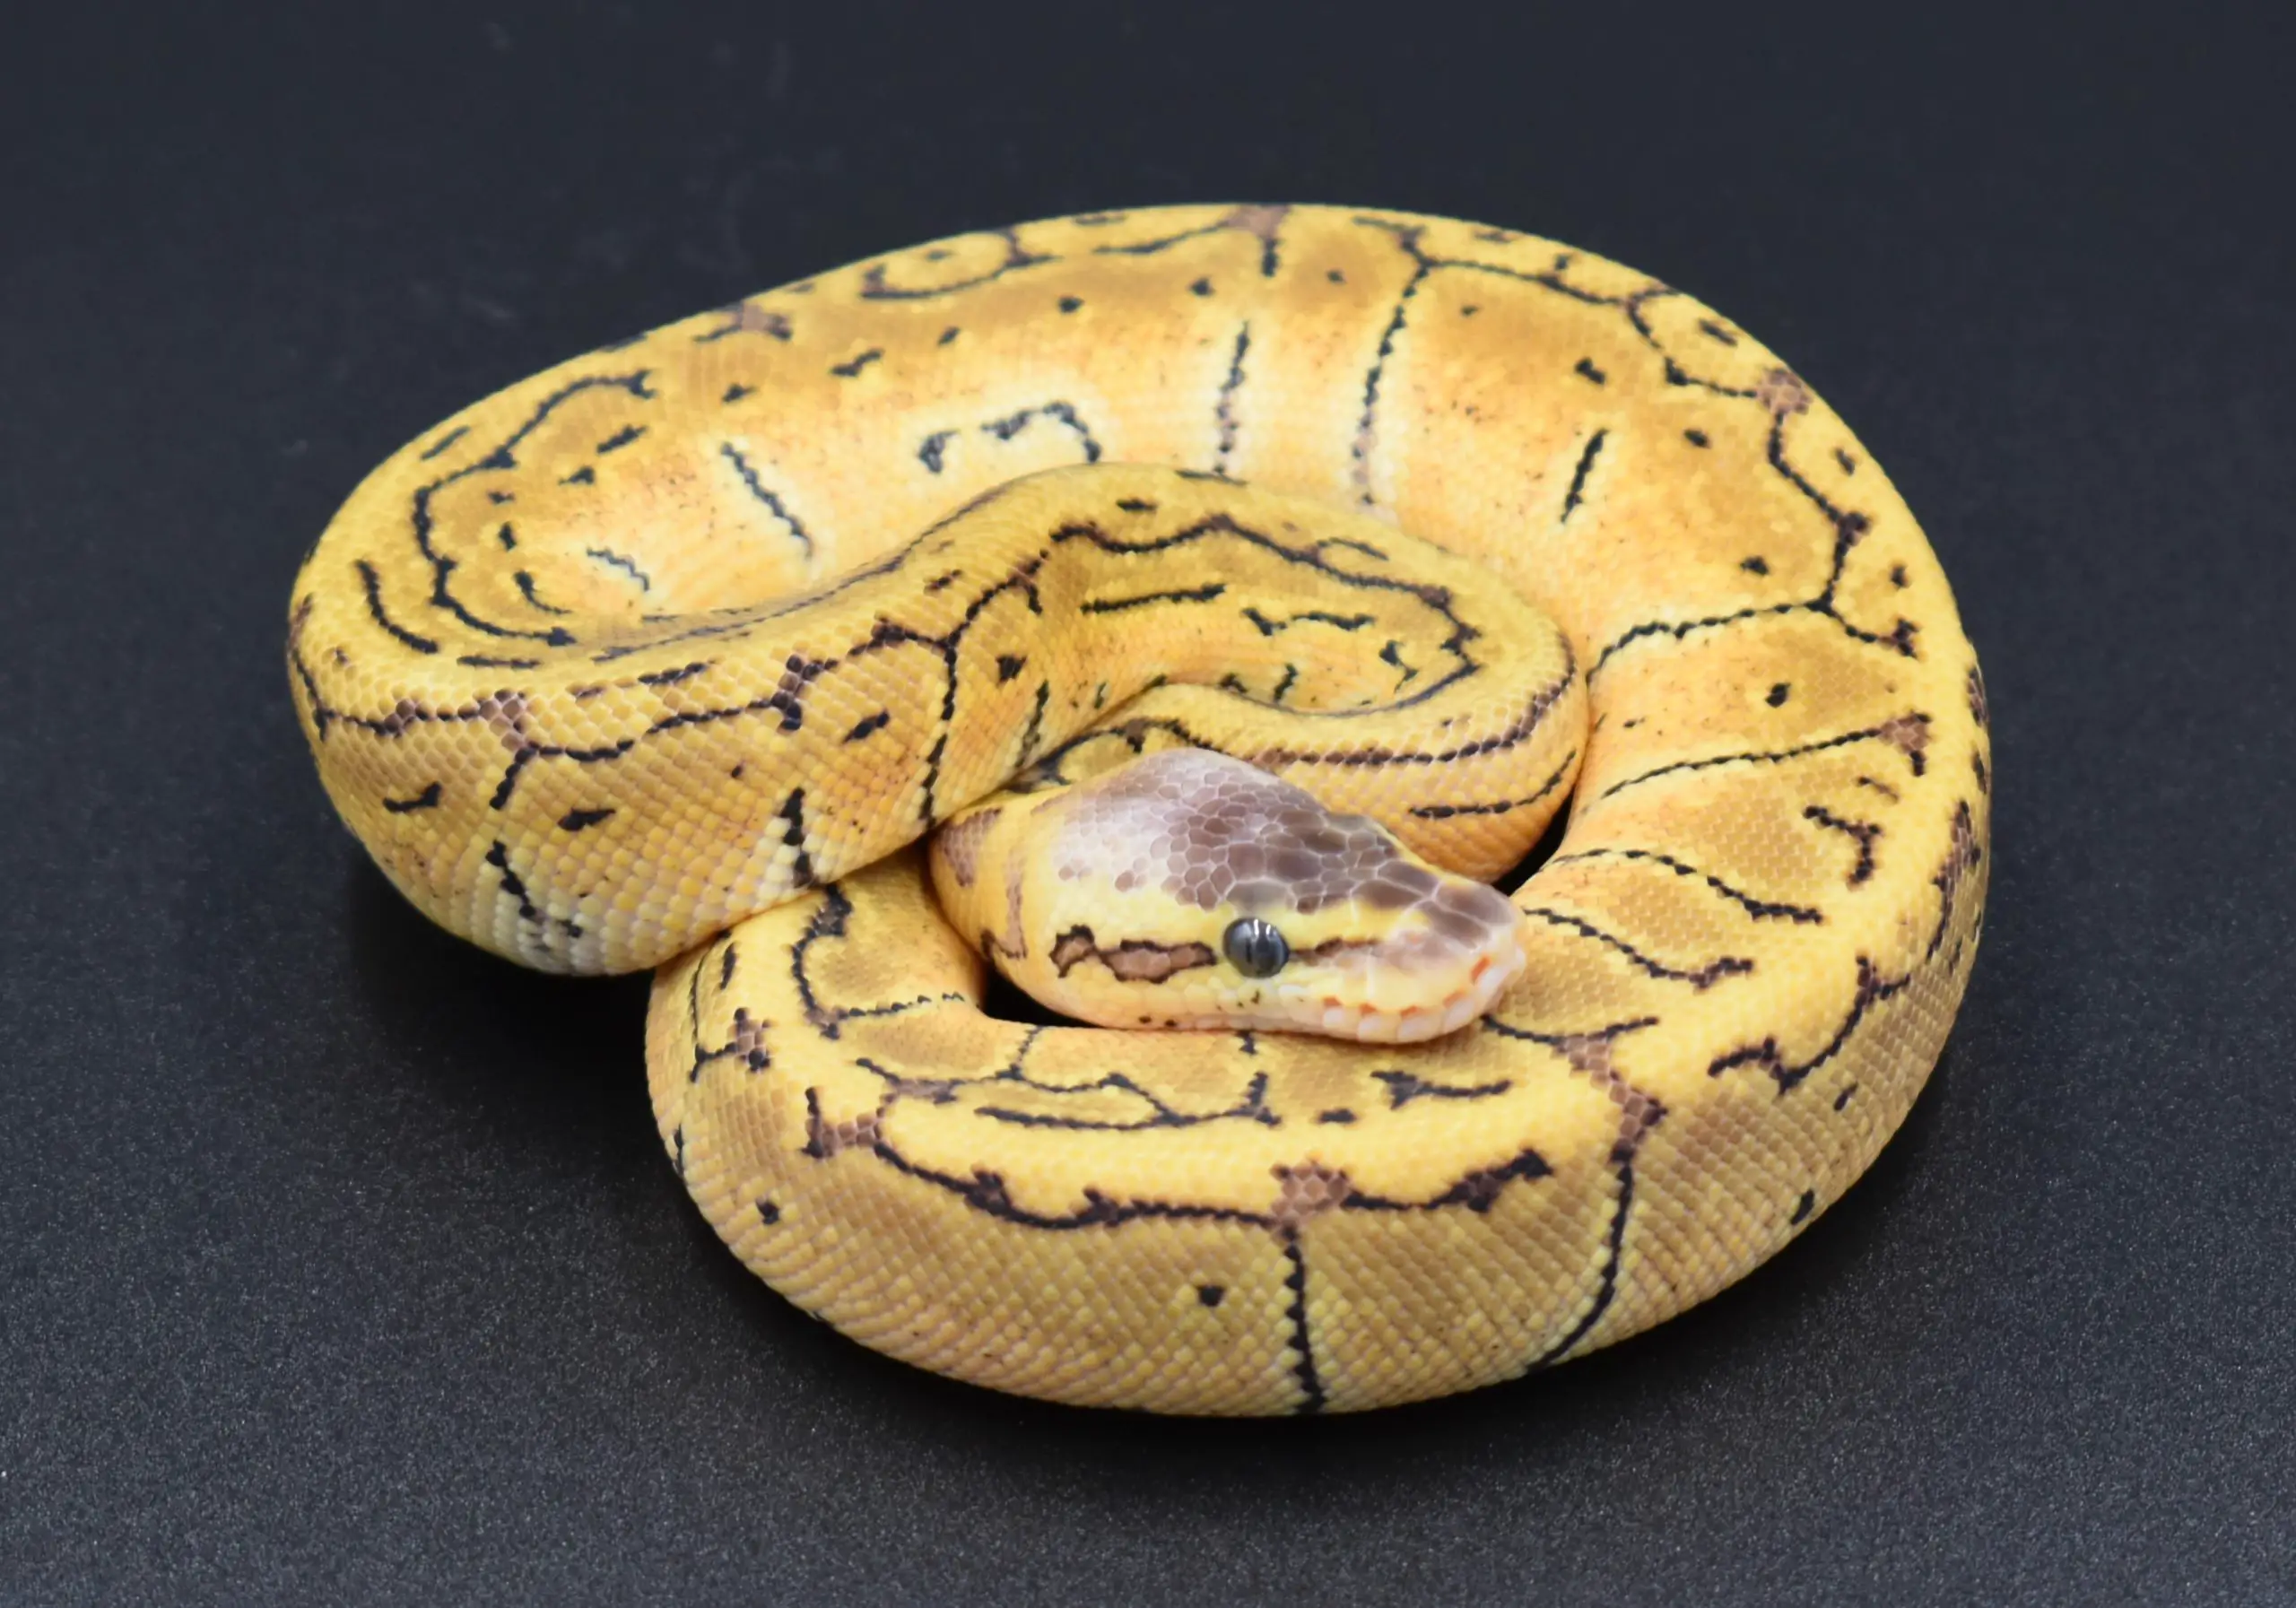 Least expensive ball python morphs